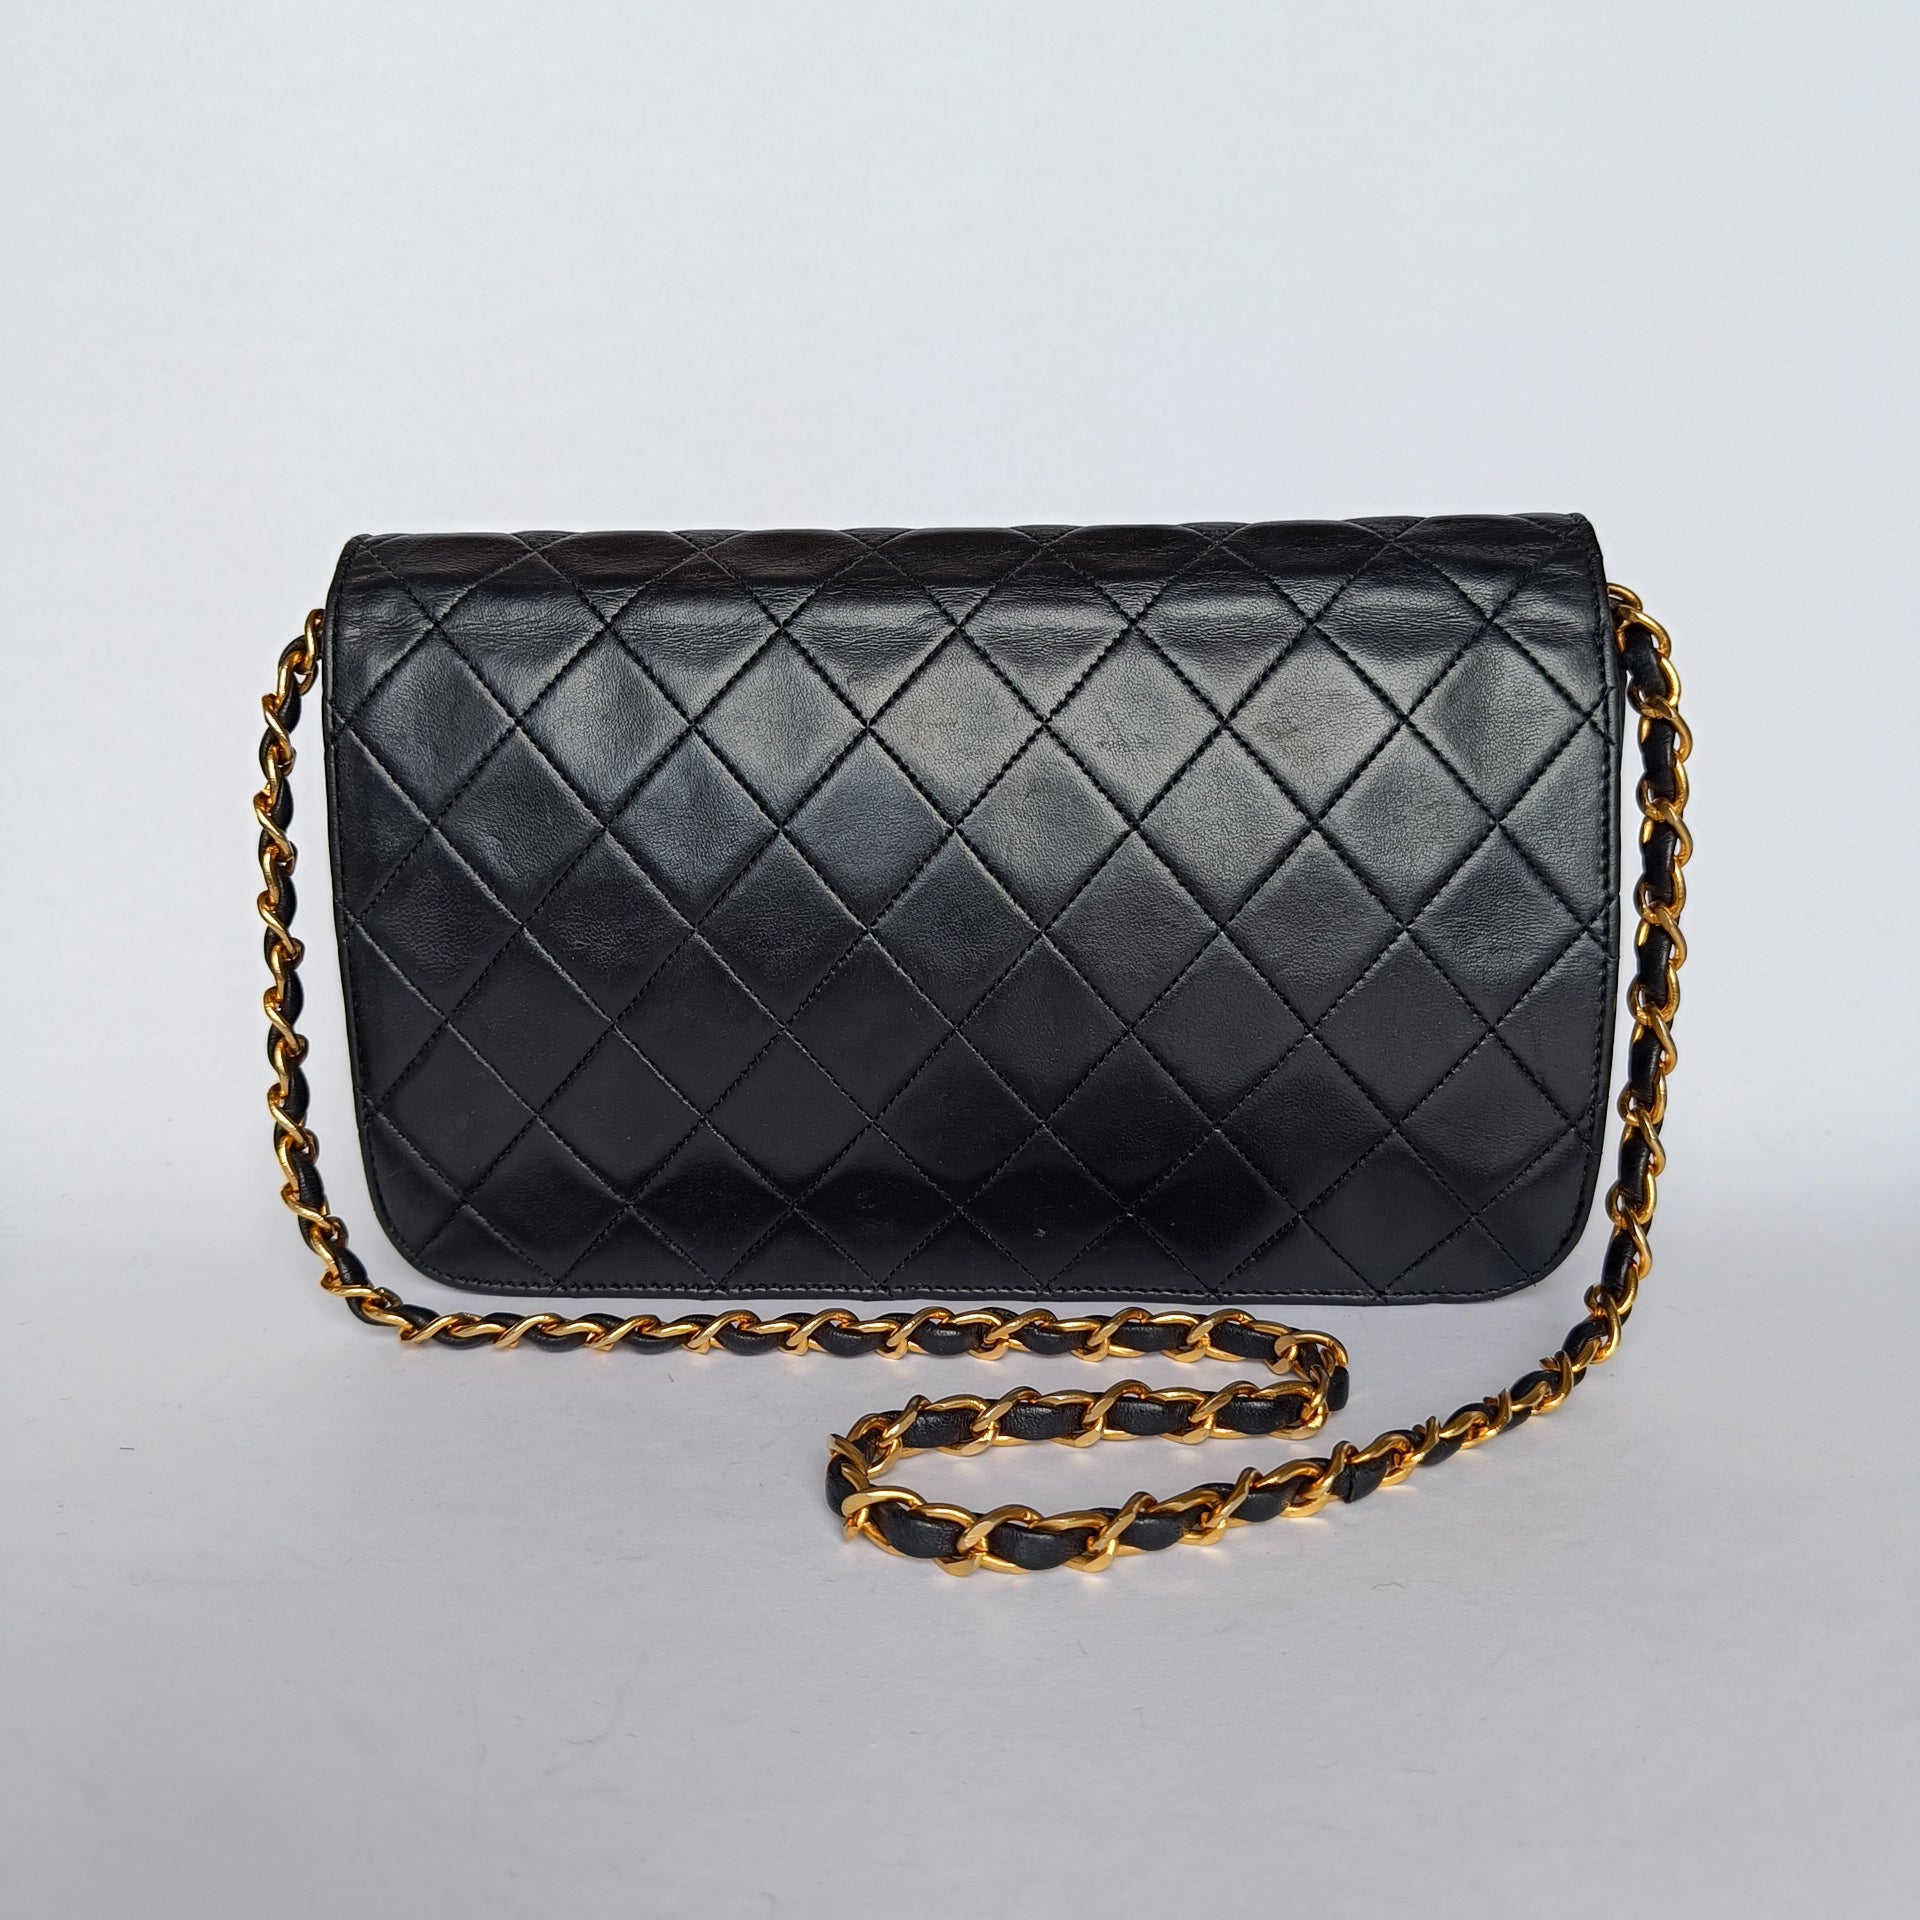 Chanel Chanel Single Full Flap Bag Lambskin Leather - Shoulder bag - Etoile Luxury Vintage